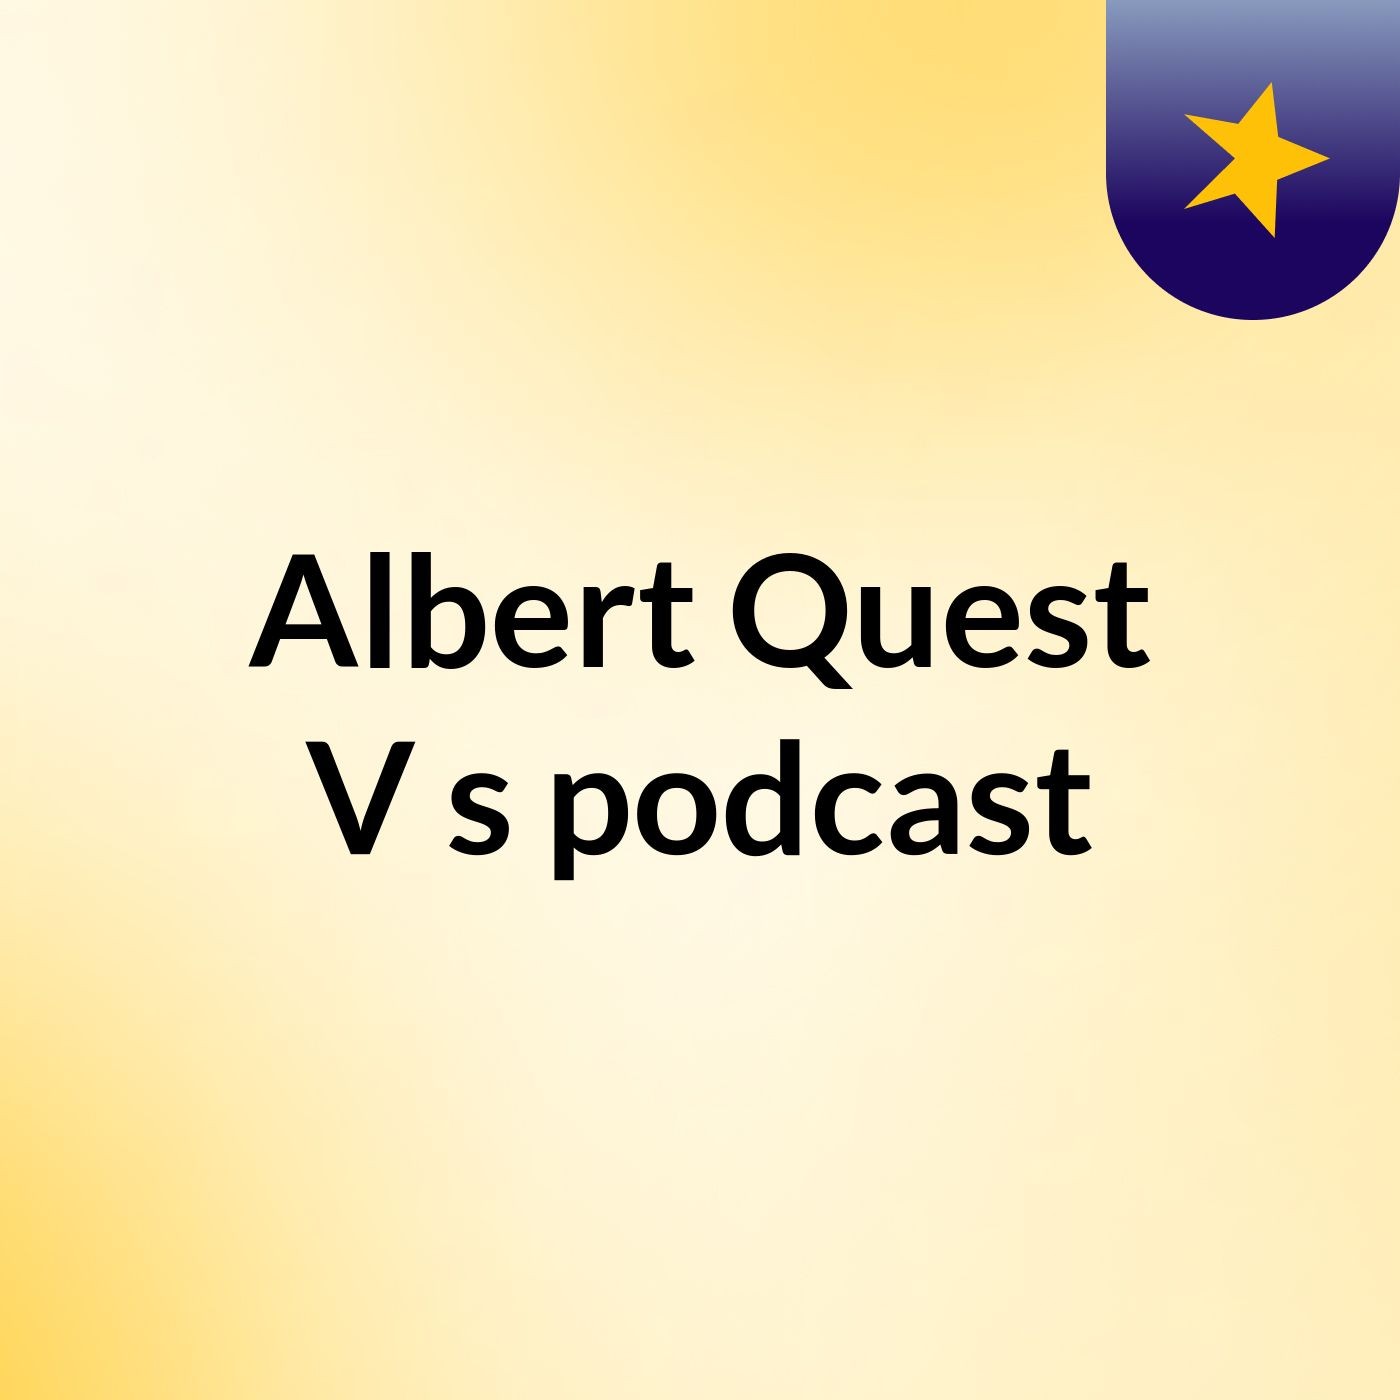 Albert Quest V's podcast